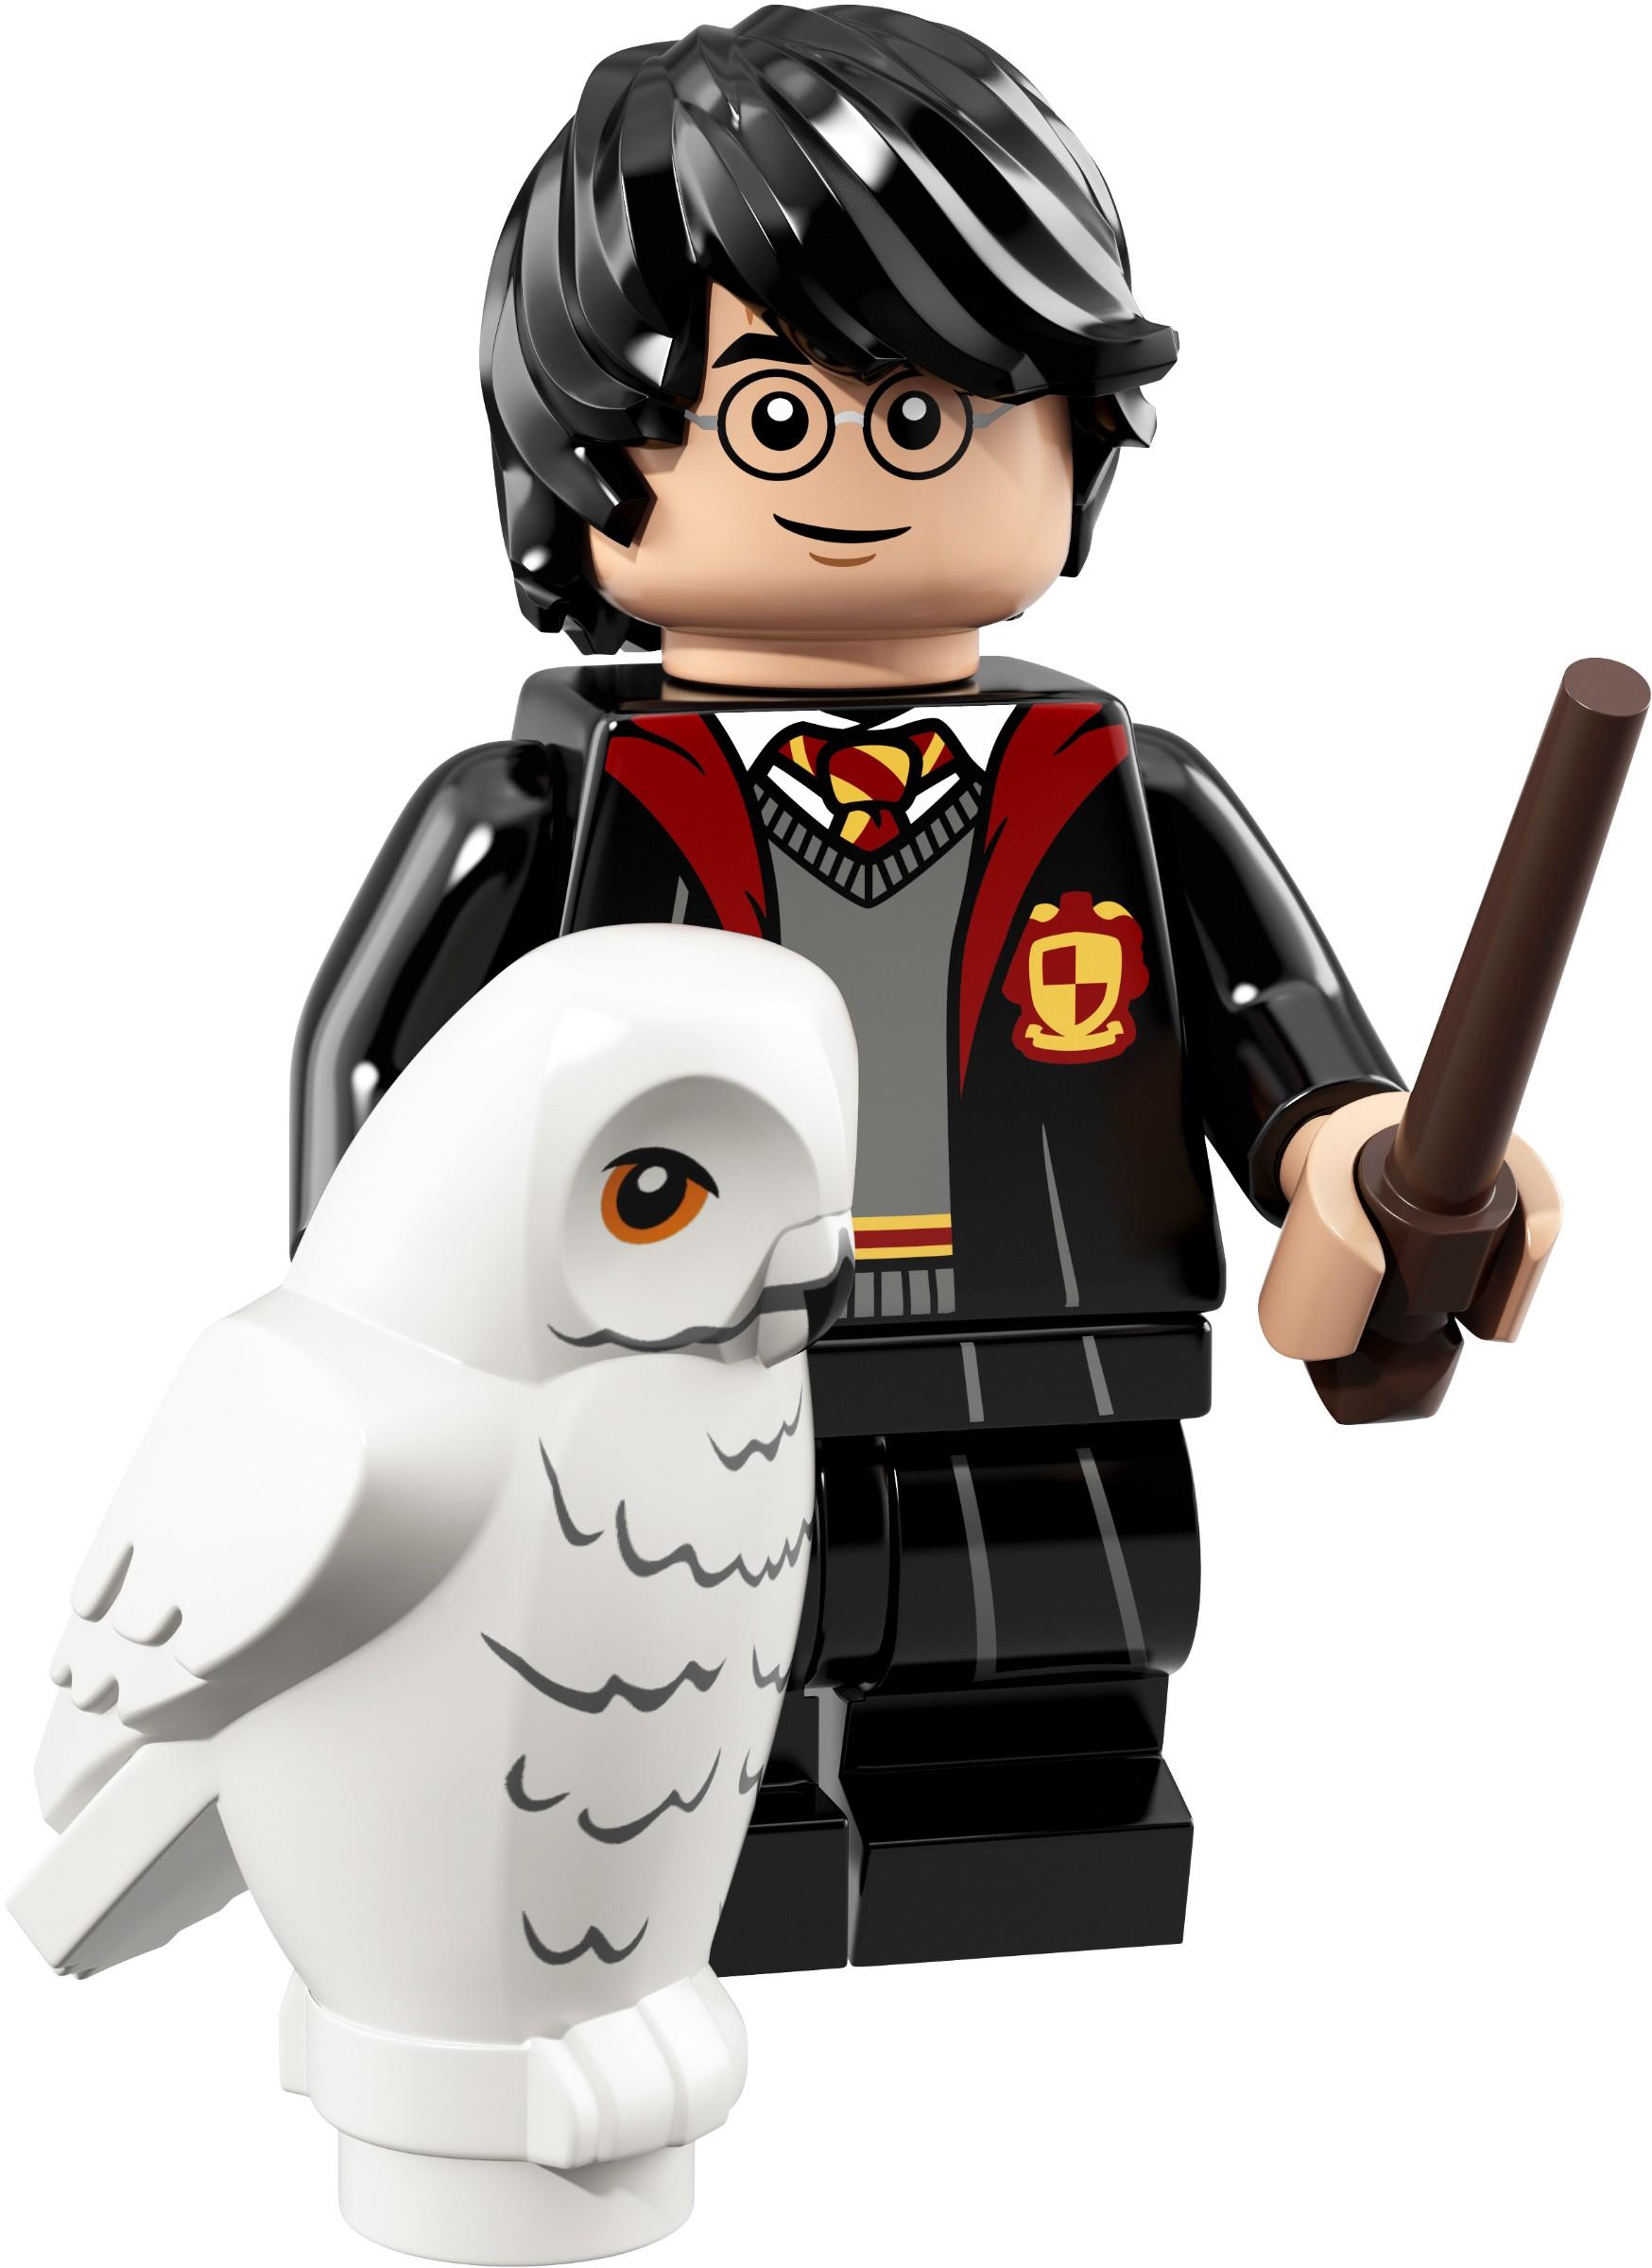 New Genuine Lego Harry Potter & Fantastic Beasts Series 71022 Minifigures CHOOSE 